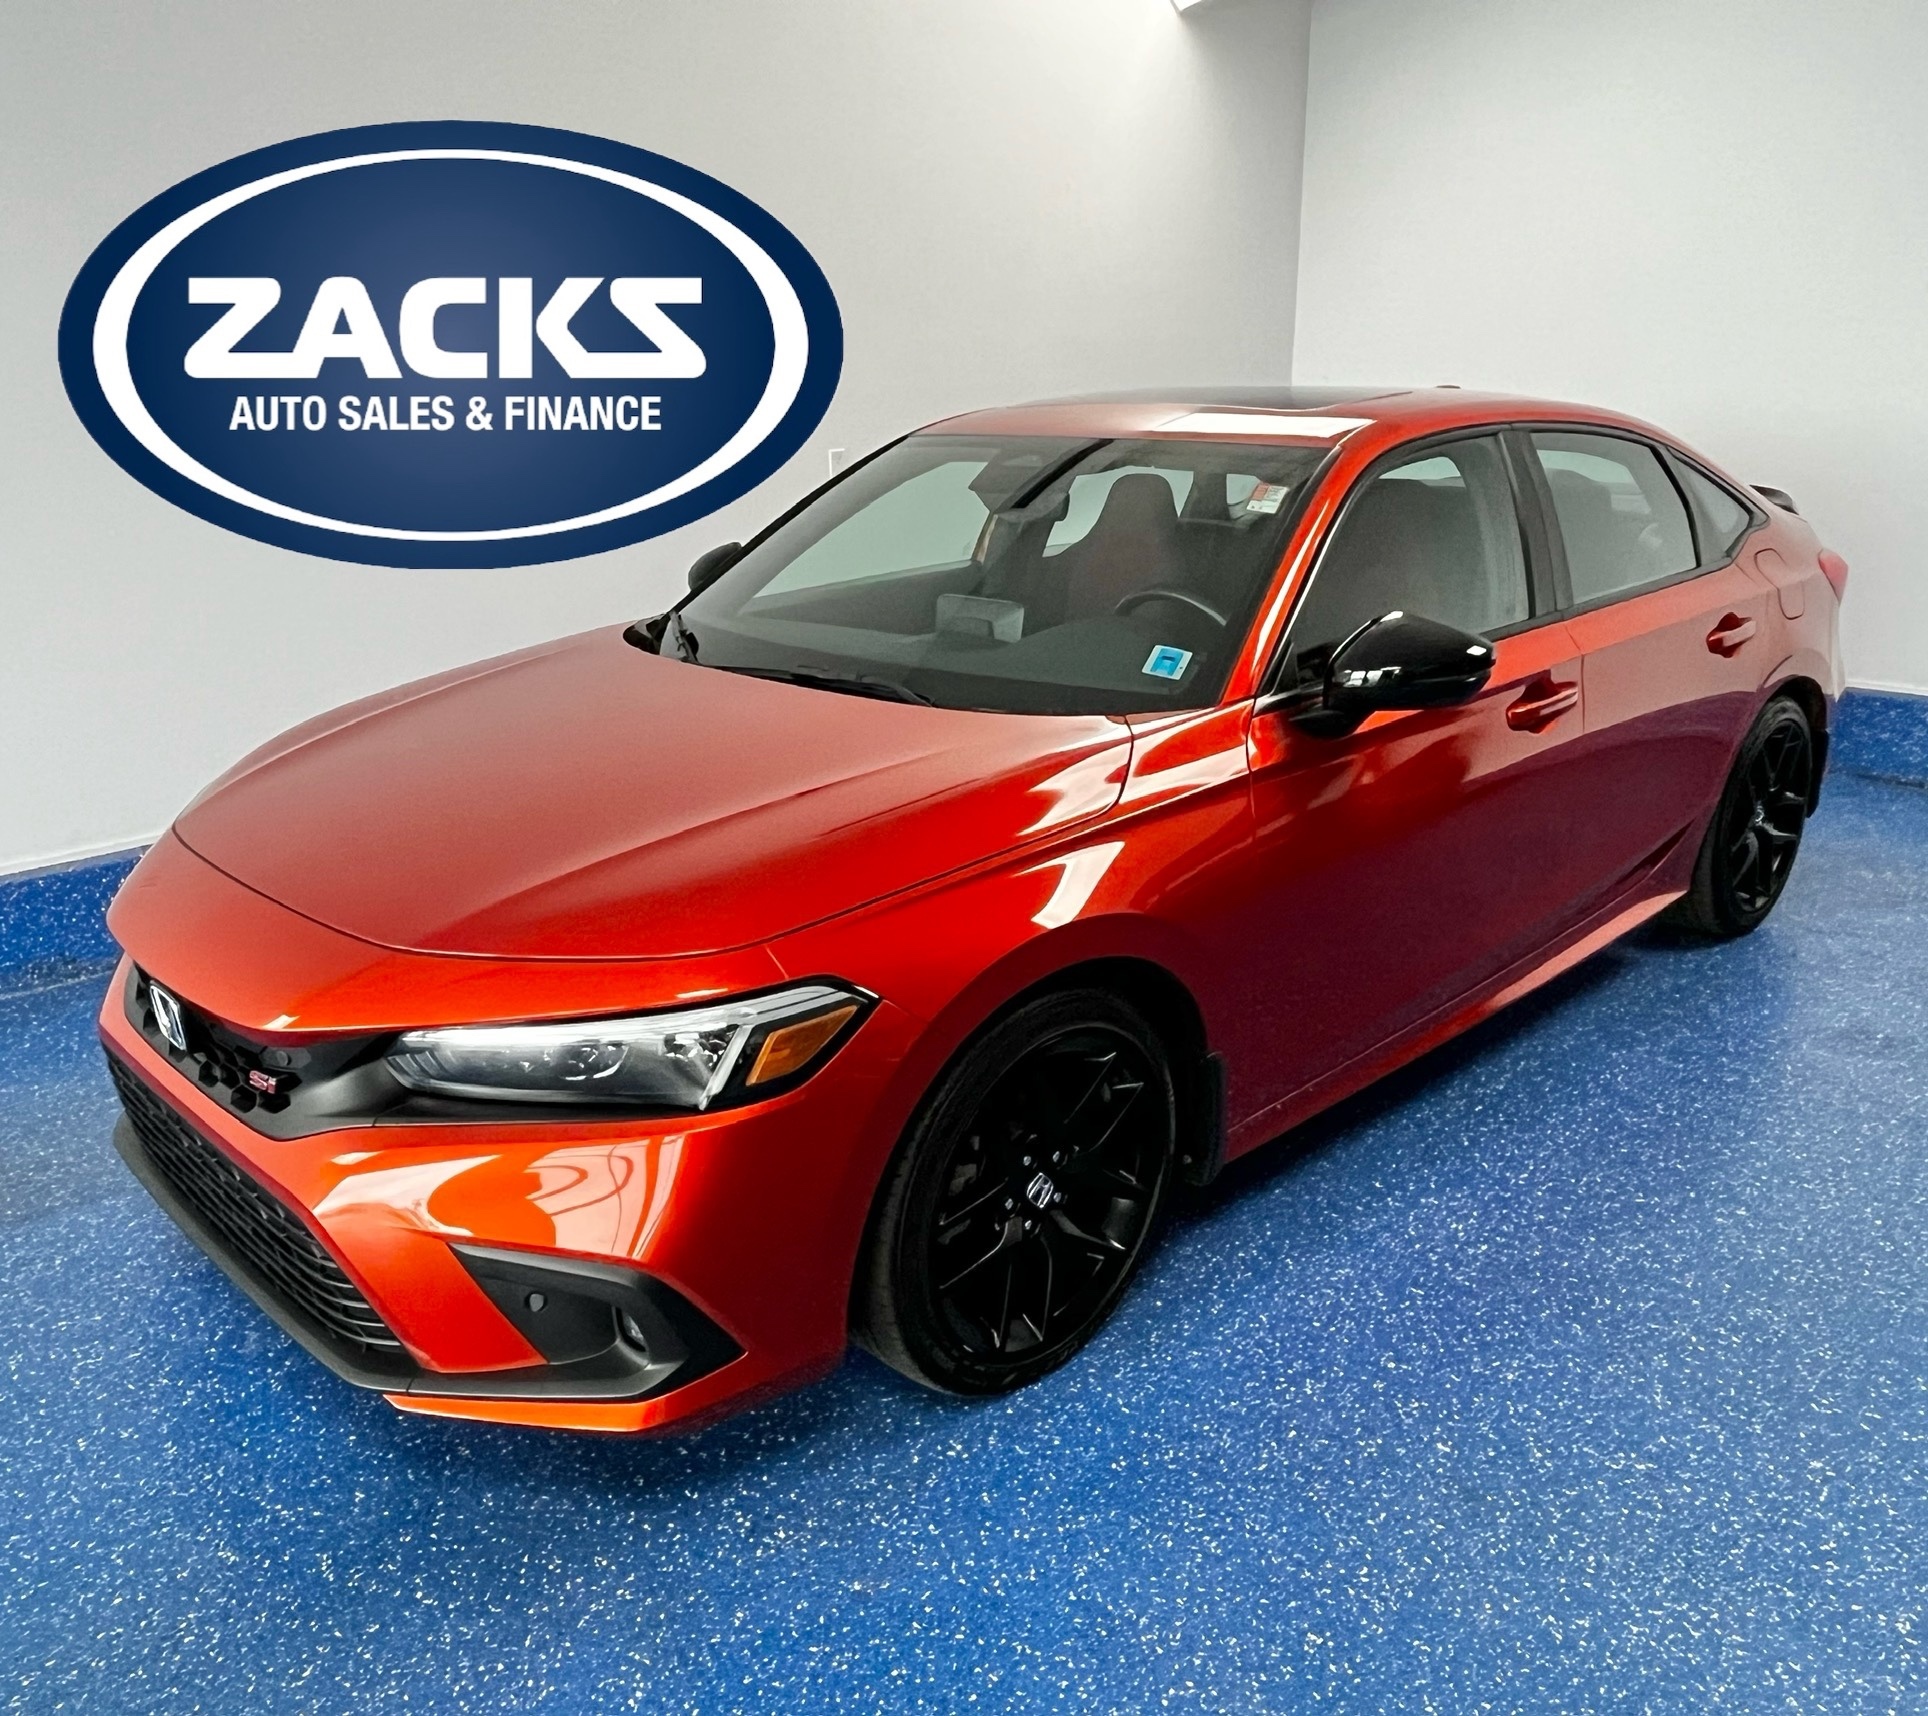 2022 Honda Civic Si | Zacks Certified | Low Kms